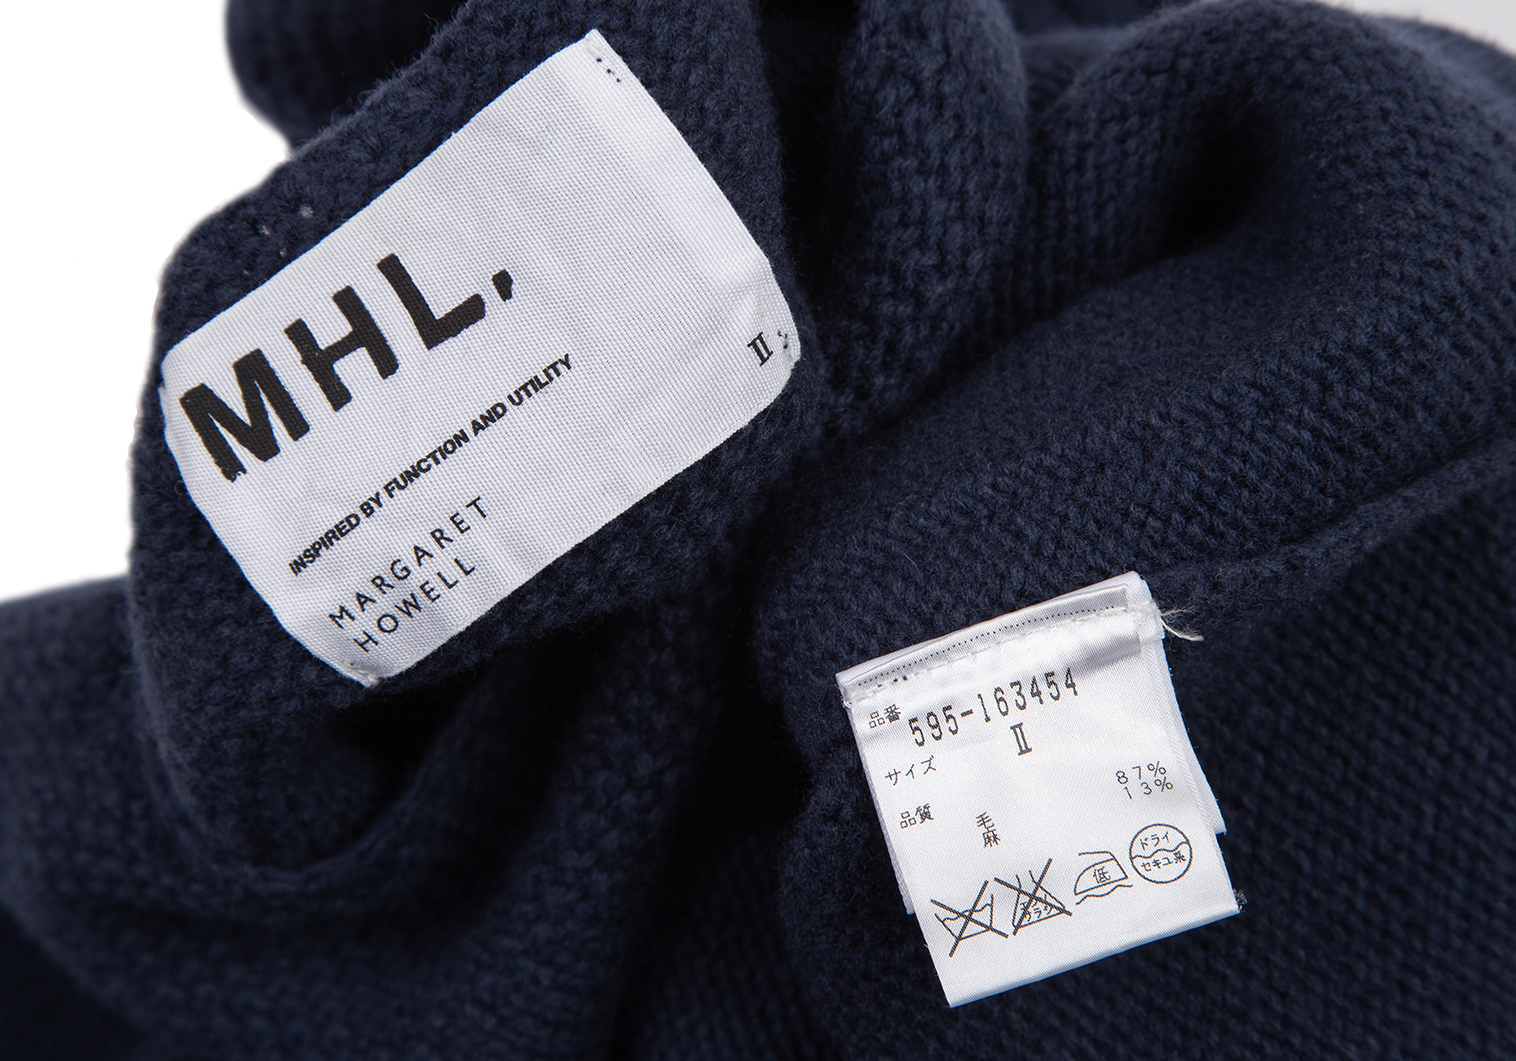 MHL. ニット セーター サイズ II